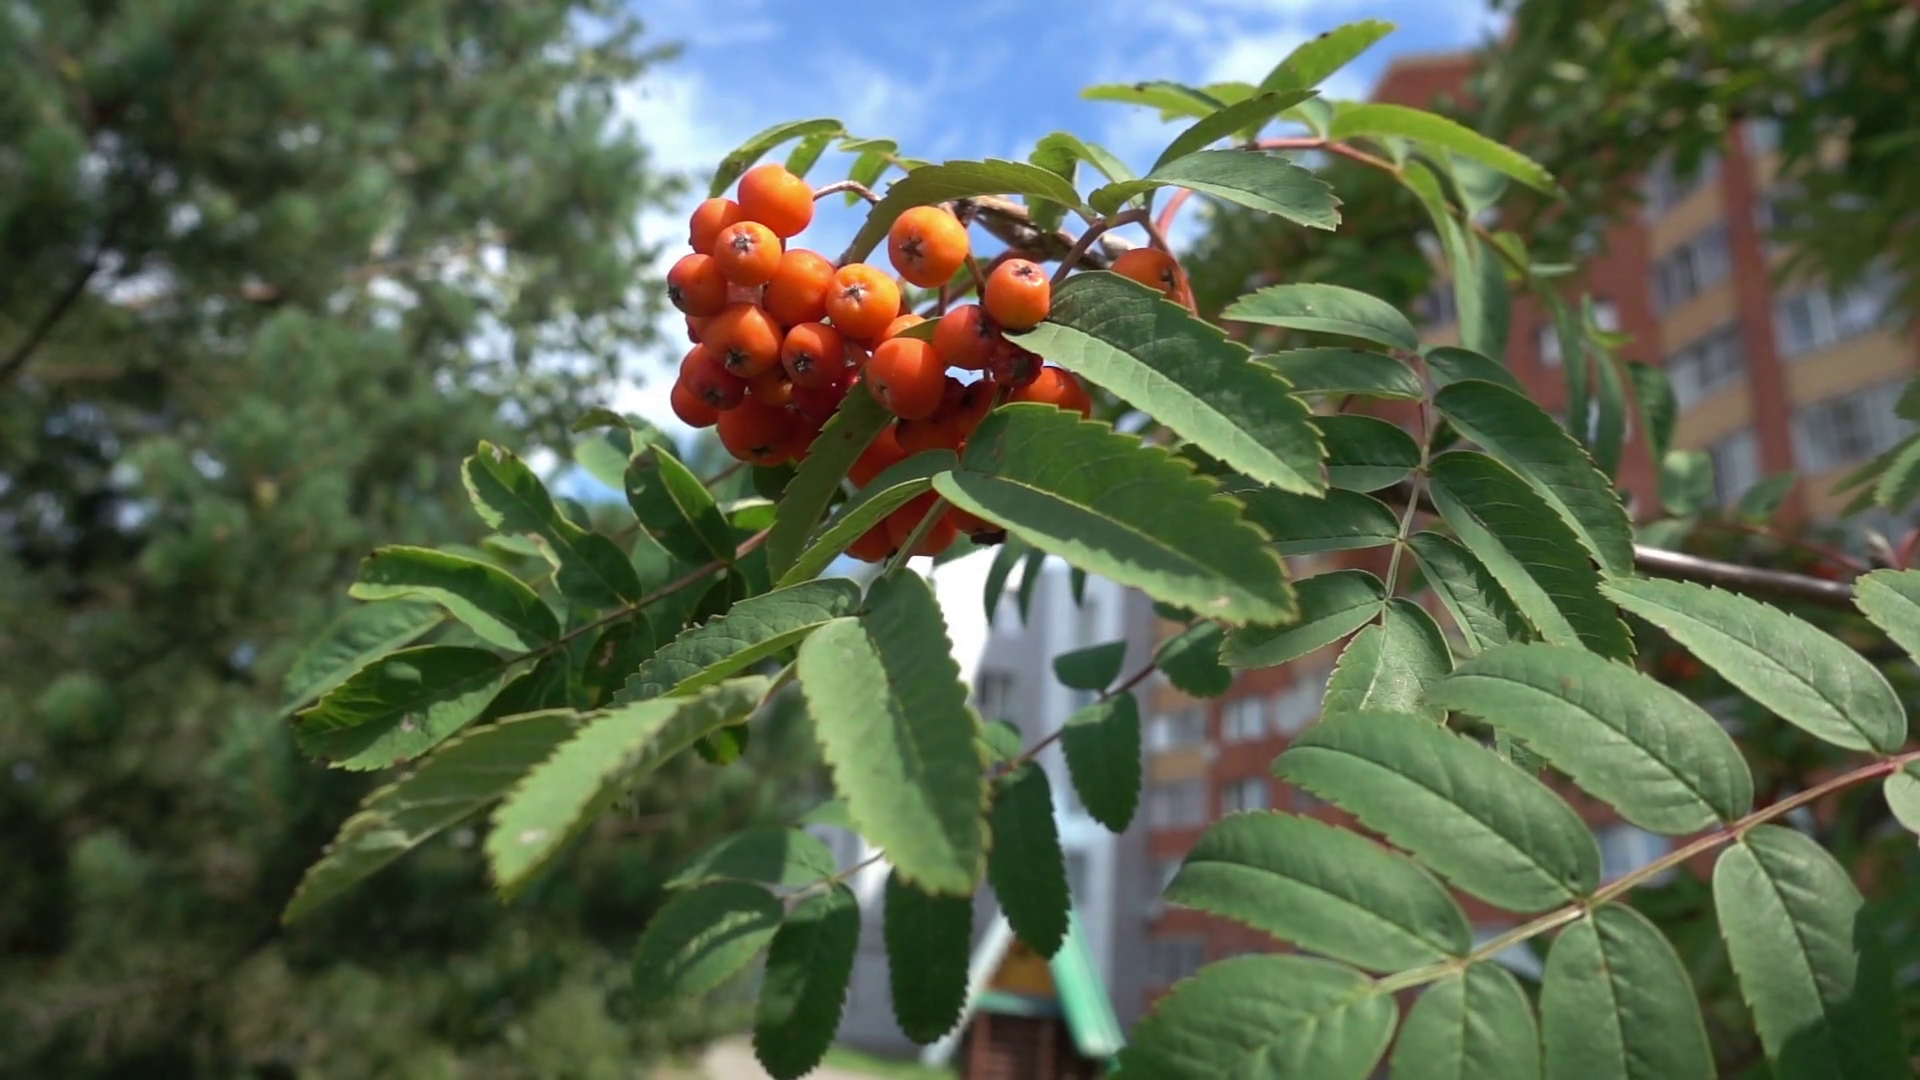 Closeup of orange Rowan berries or Mountain Ash tree with ripe ...